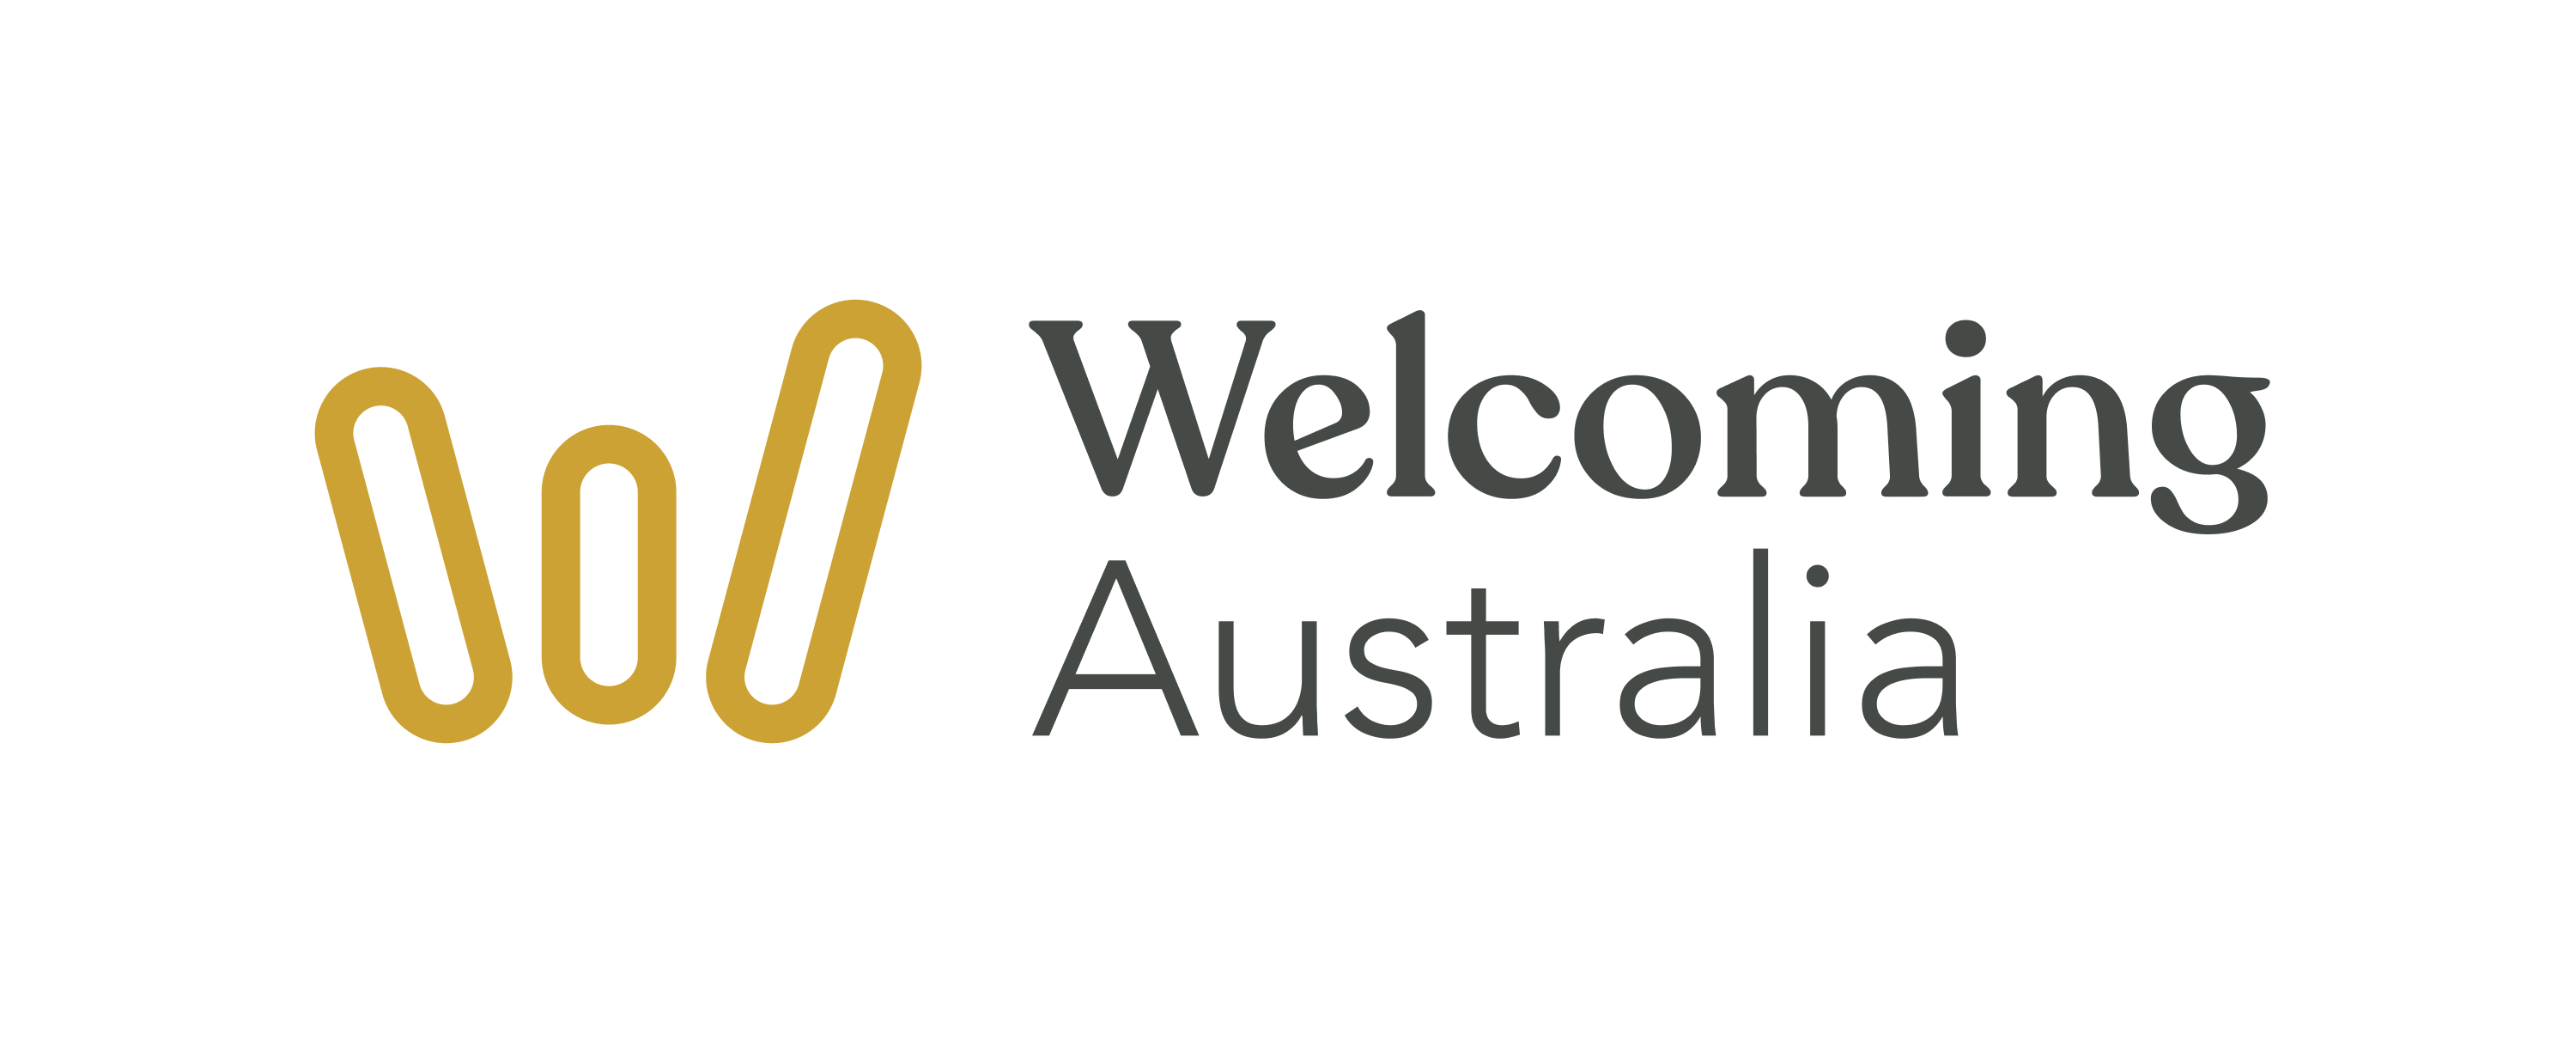 WelcomingAustralia-Brandmark-Yellow - Kate Leaney